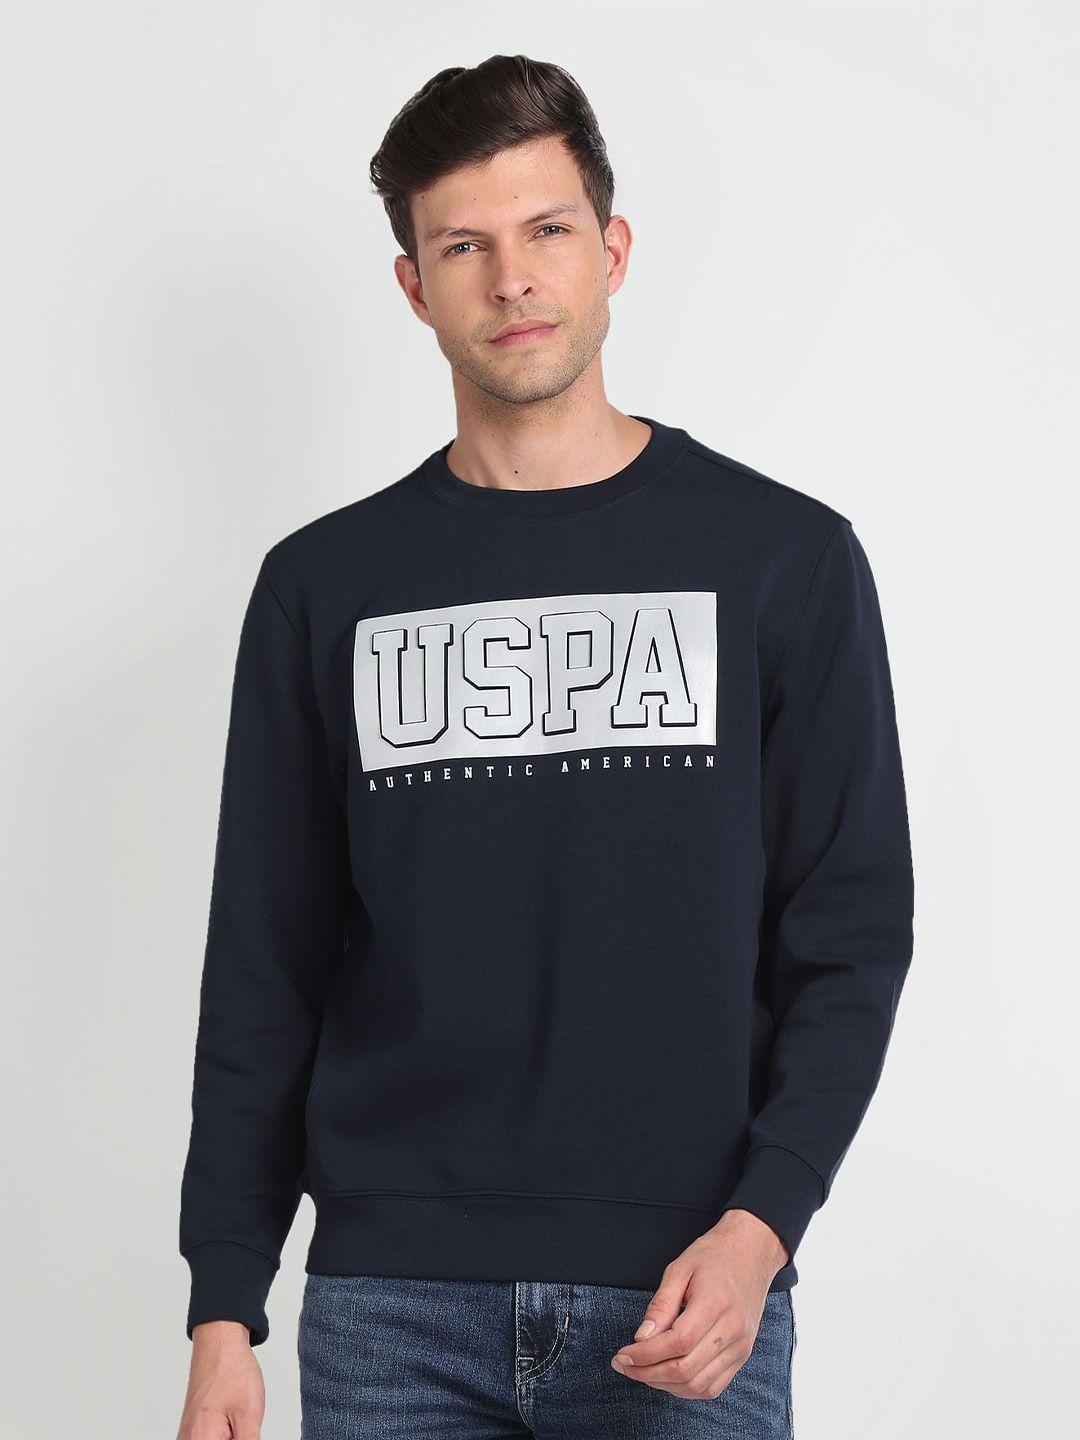 u.s. polo assn. denim co. typography printed pullover sweatshirt